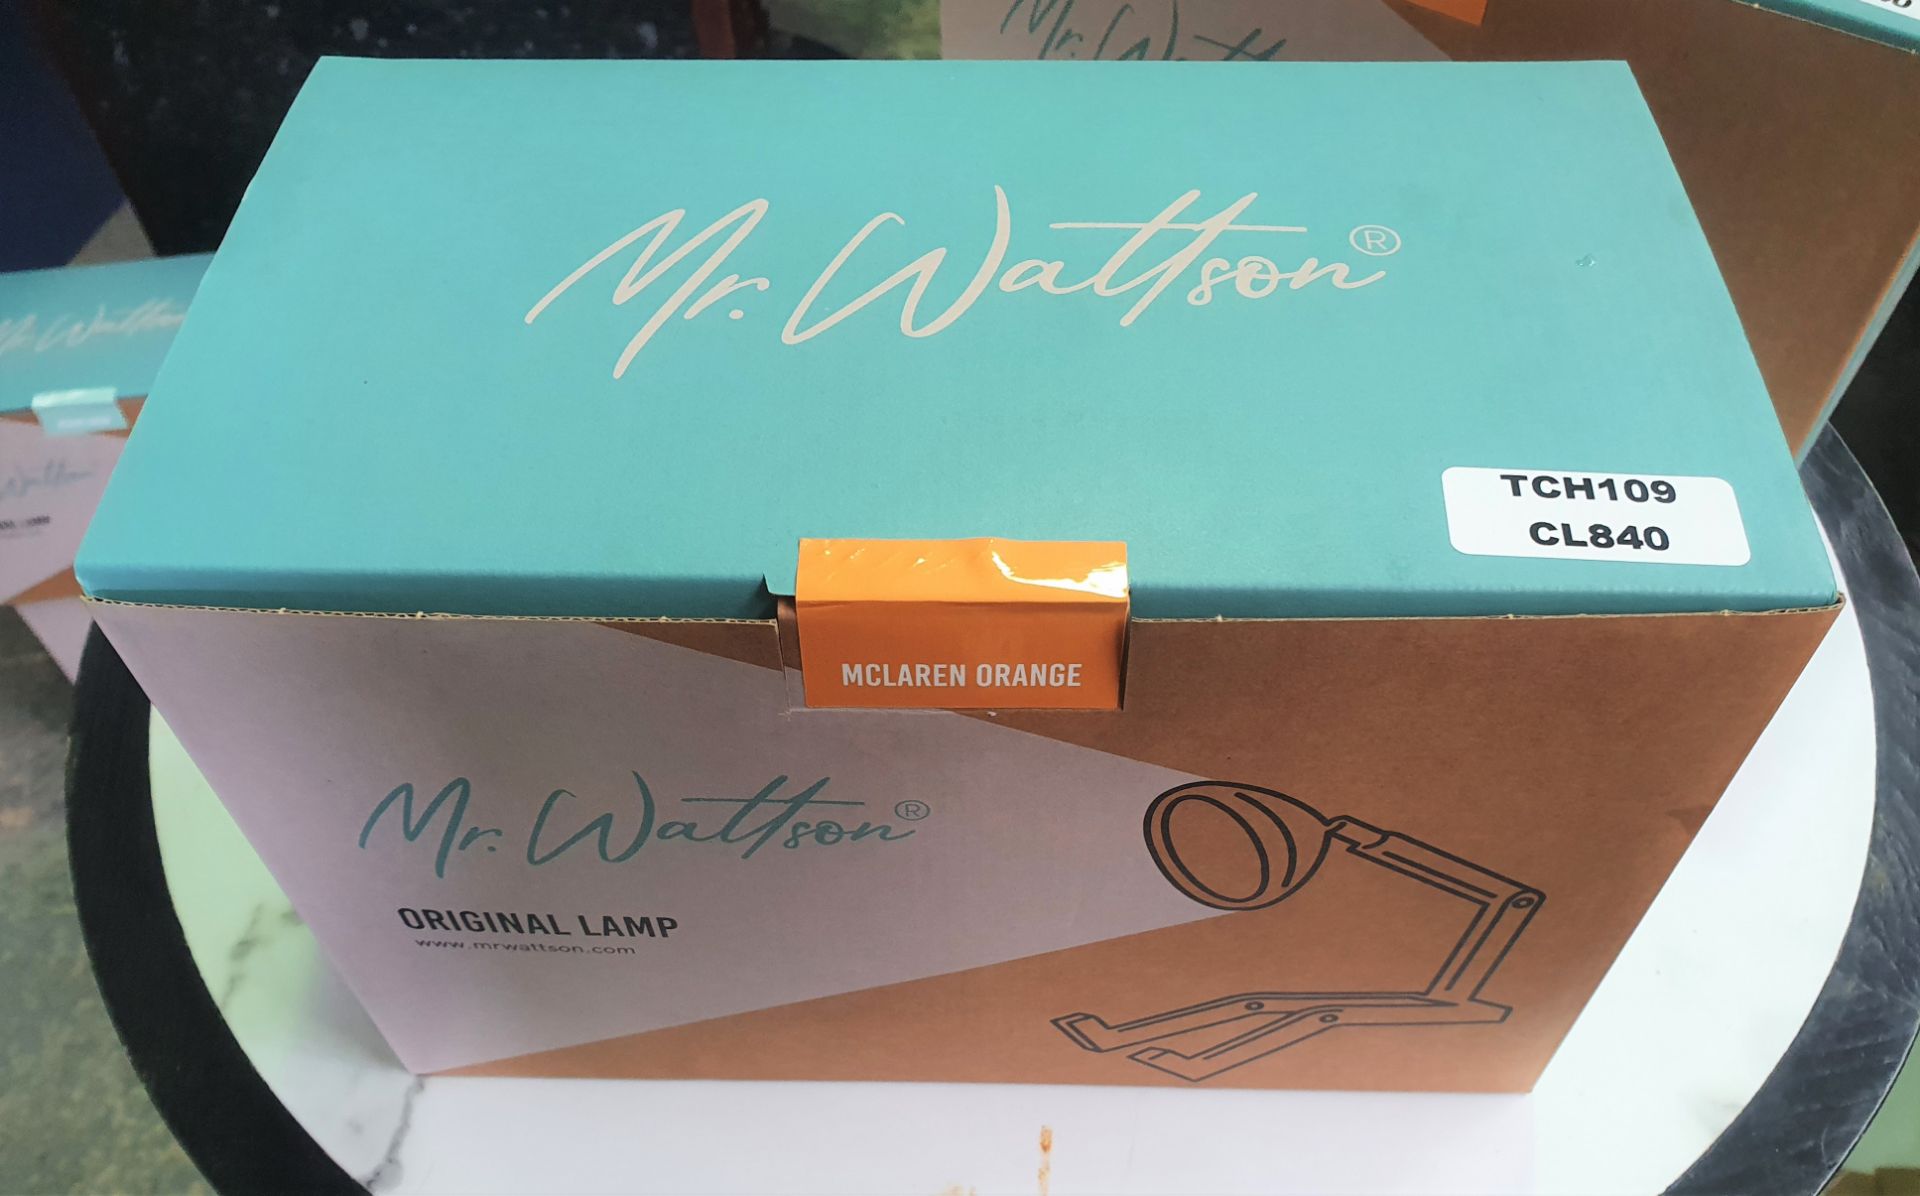 1 x Mr Wattson Original Table Lamp in McLaren Orange - New/Boxed Stock - Ref: TCH109 - CL840 - Locat - Image 6 of 6